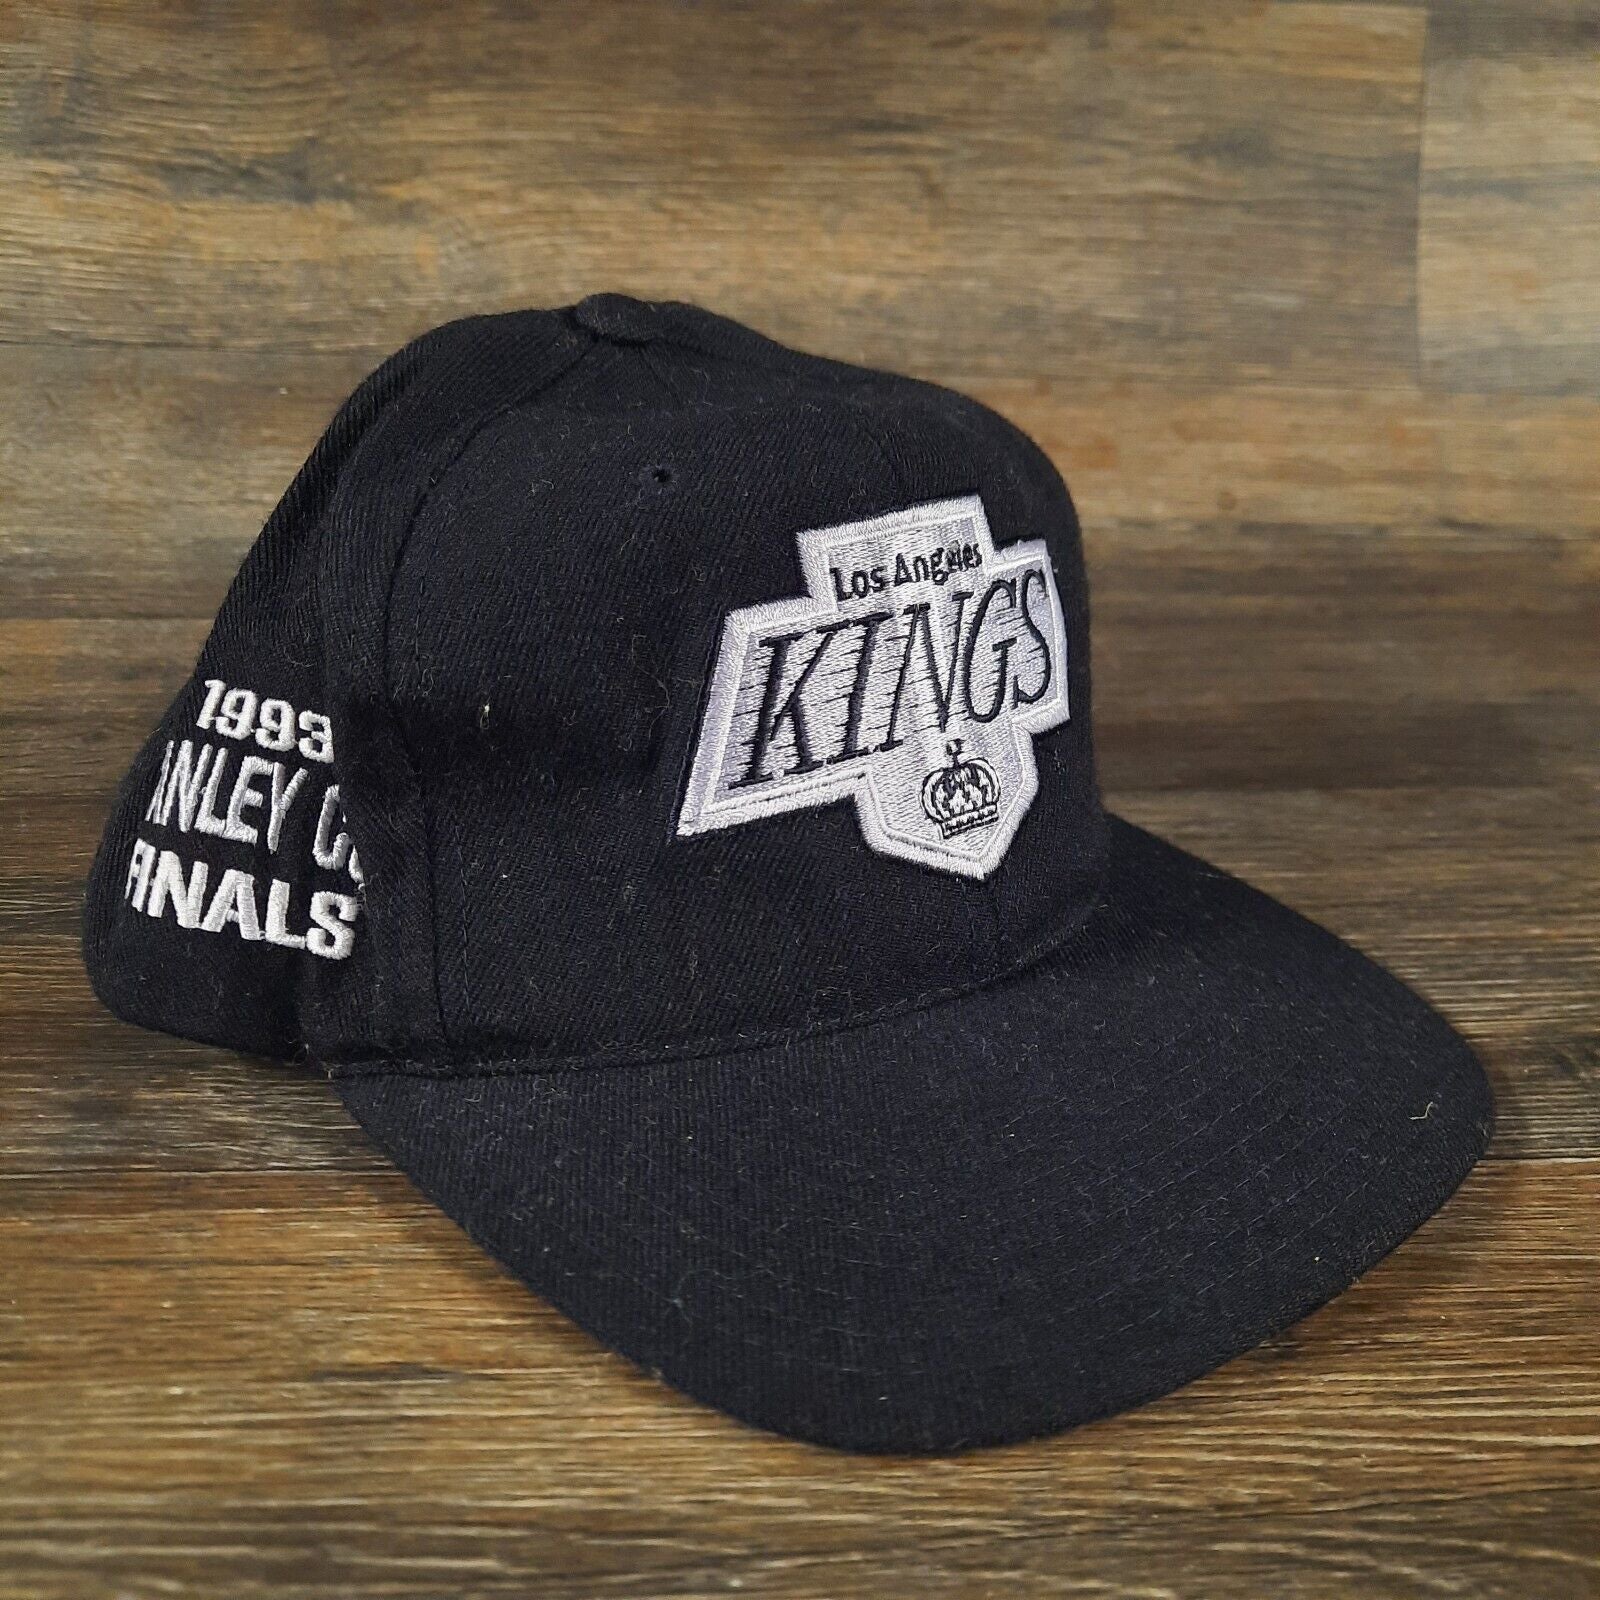 Mitchell & Ness La Kings Retro Snapback Cap in Black for Men